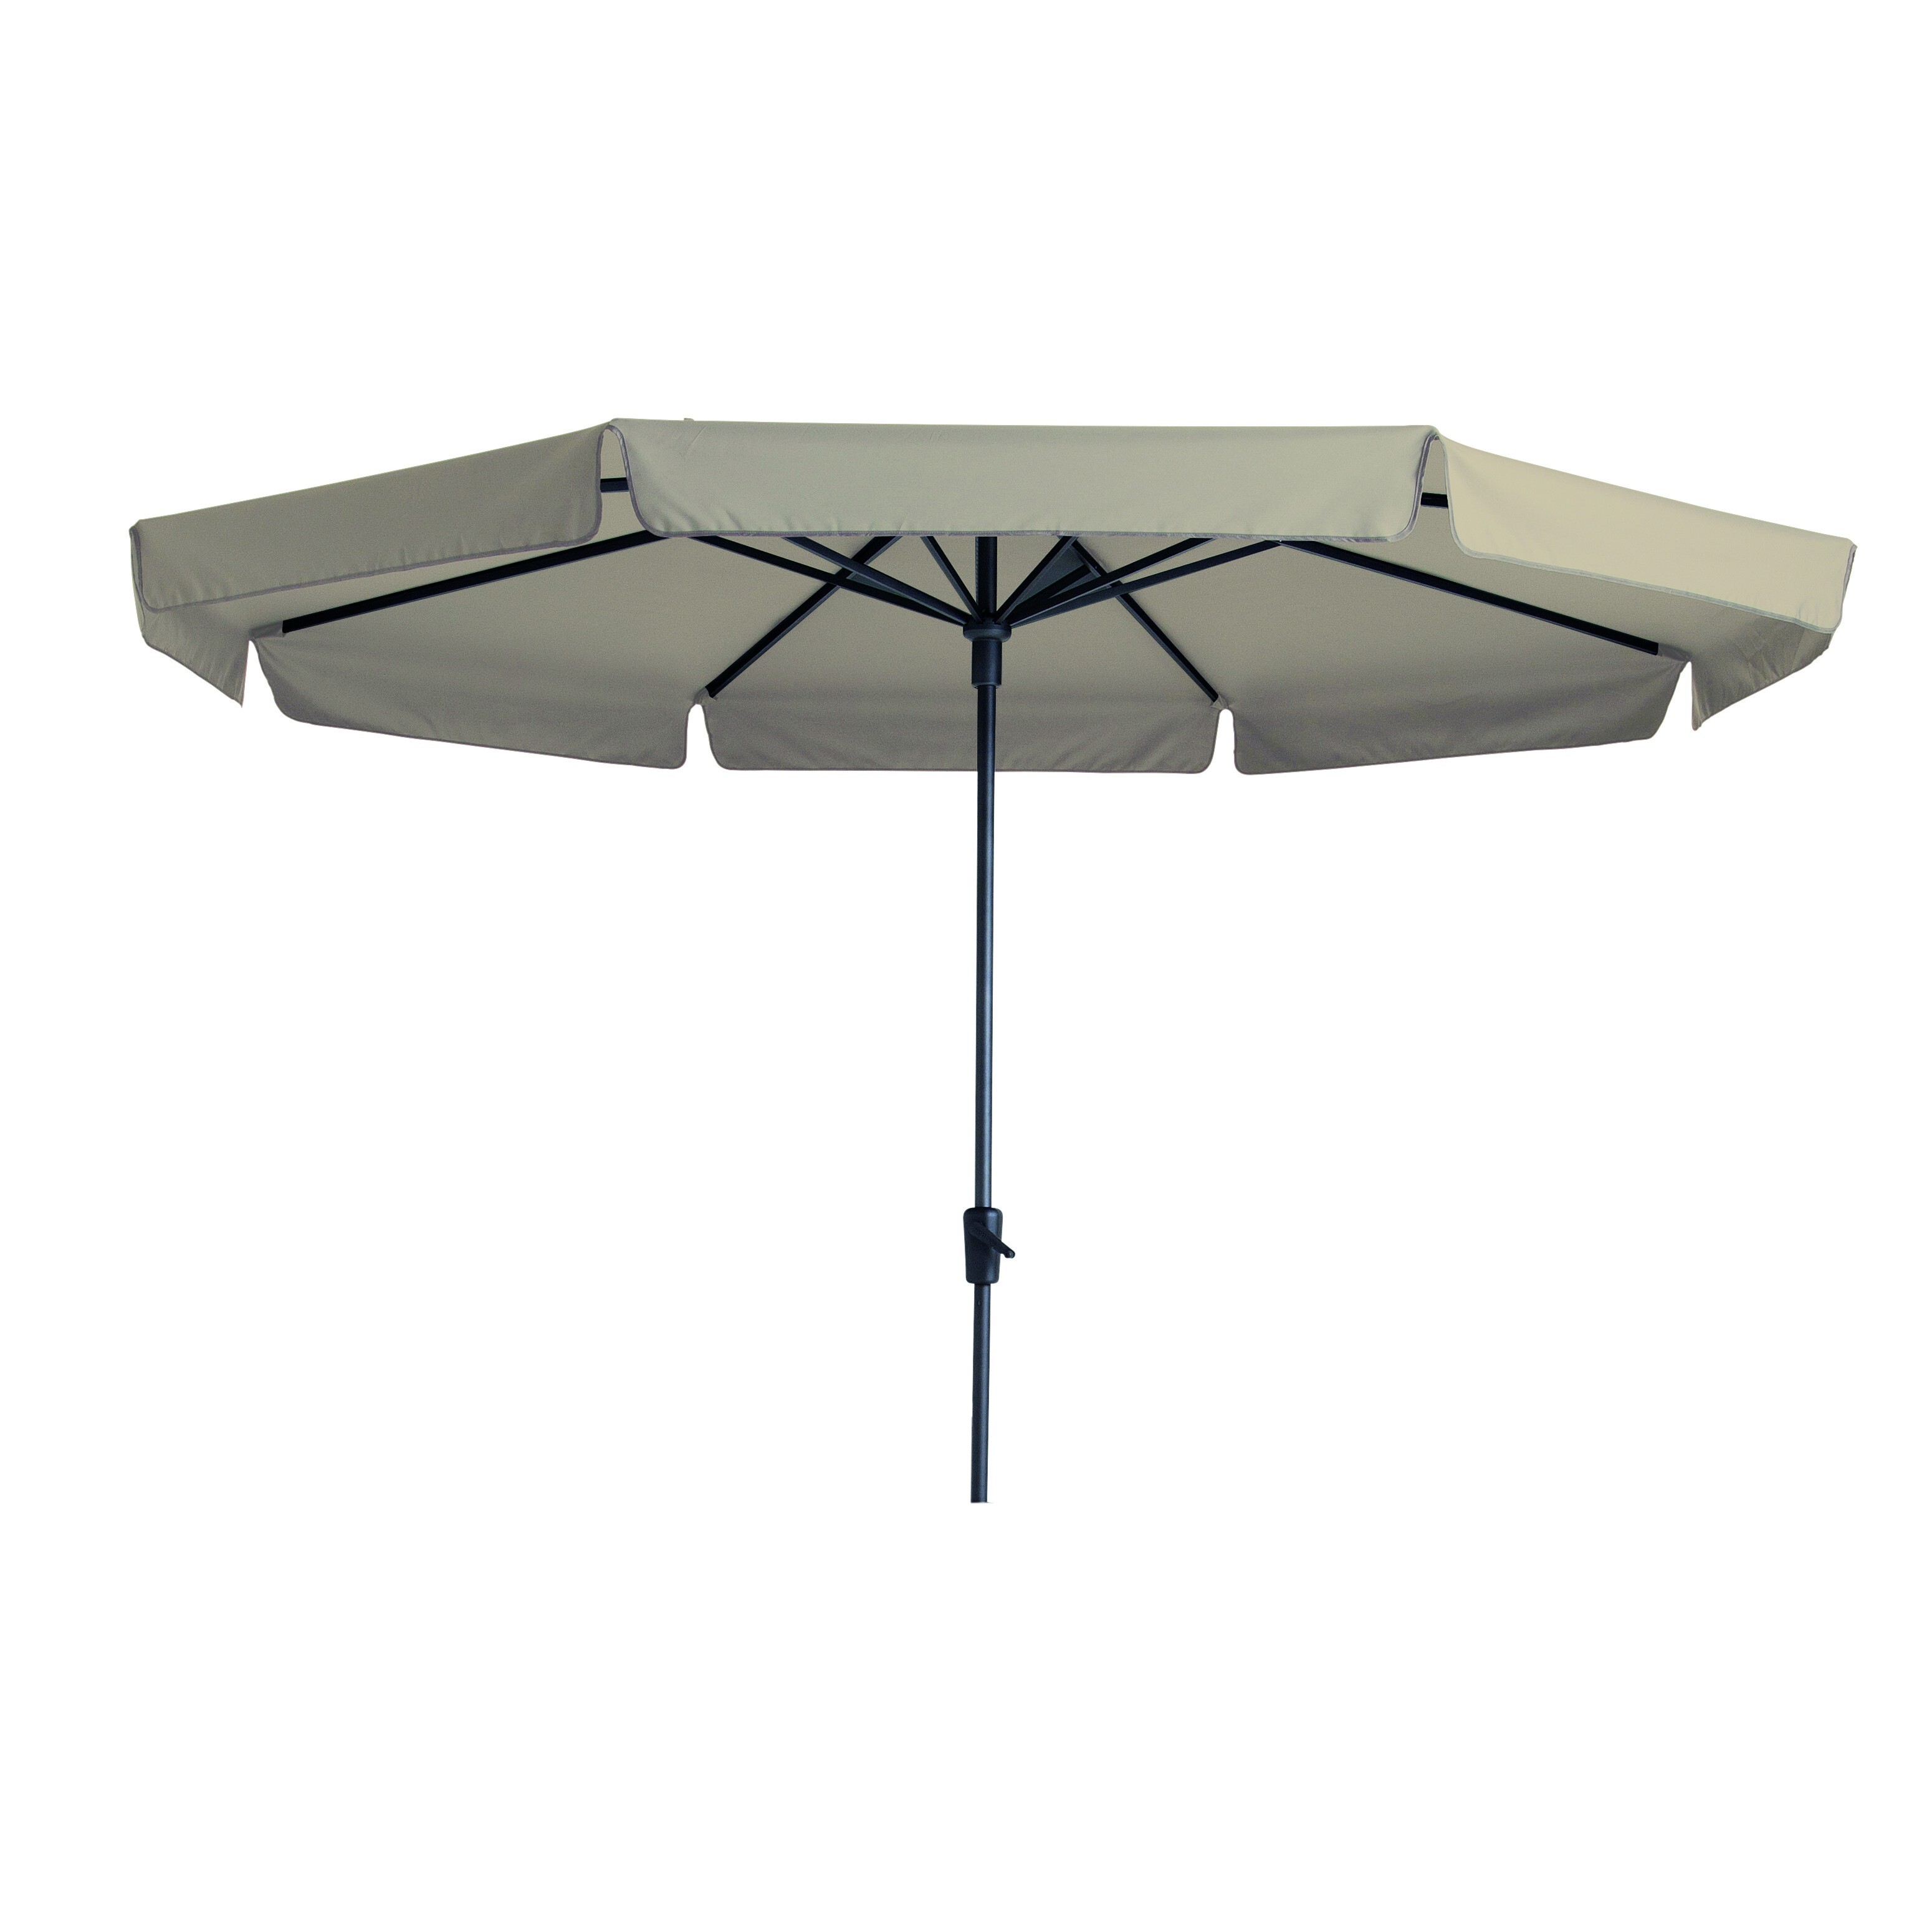 Madison parasol Syros round Ø350cm Ecru